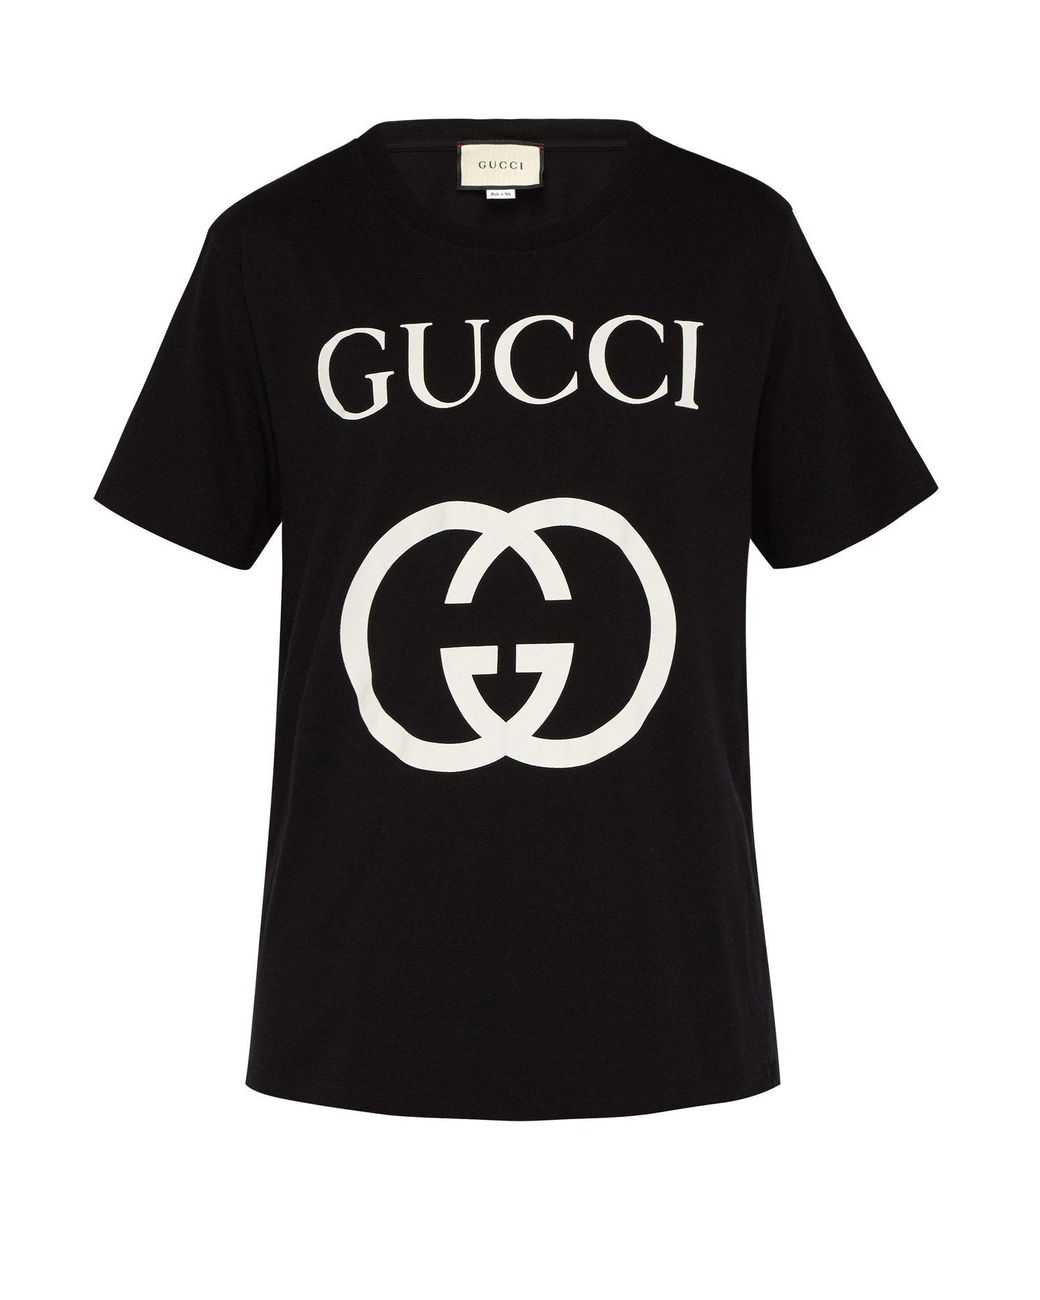 Gucci Cotton Oversize T-shirt With Interlocking G in Black White (Black ...